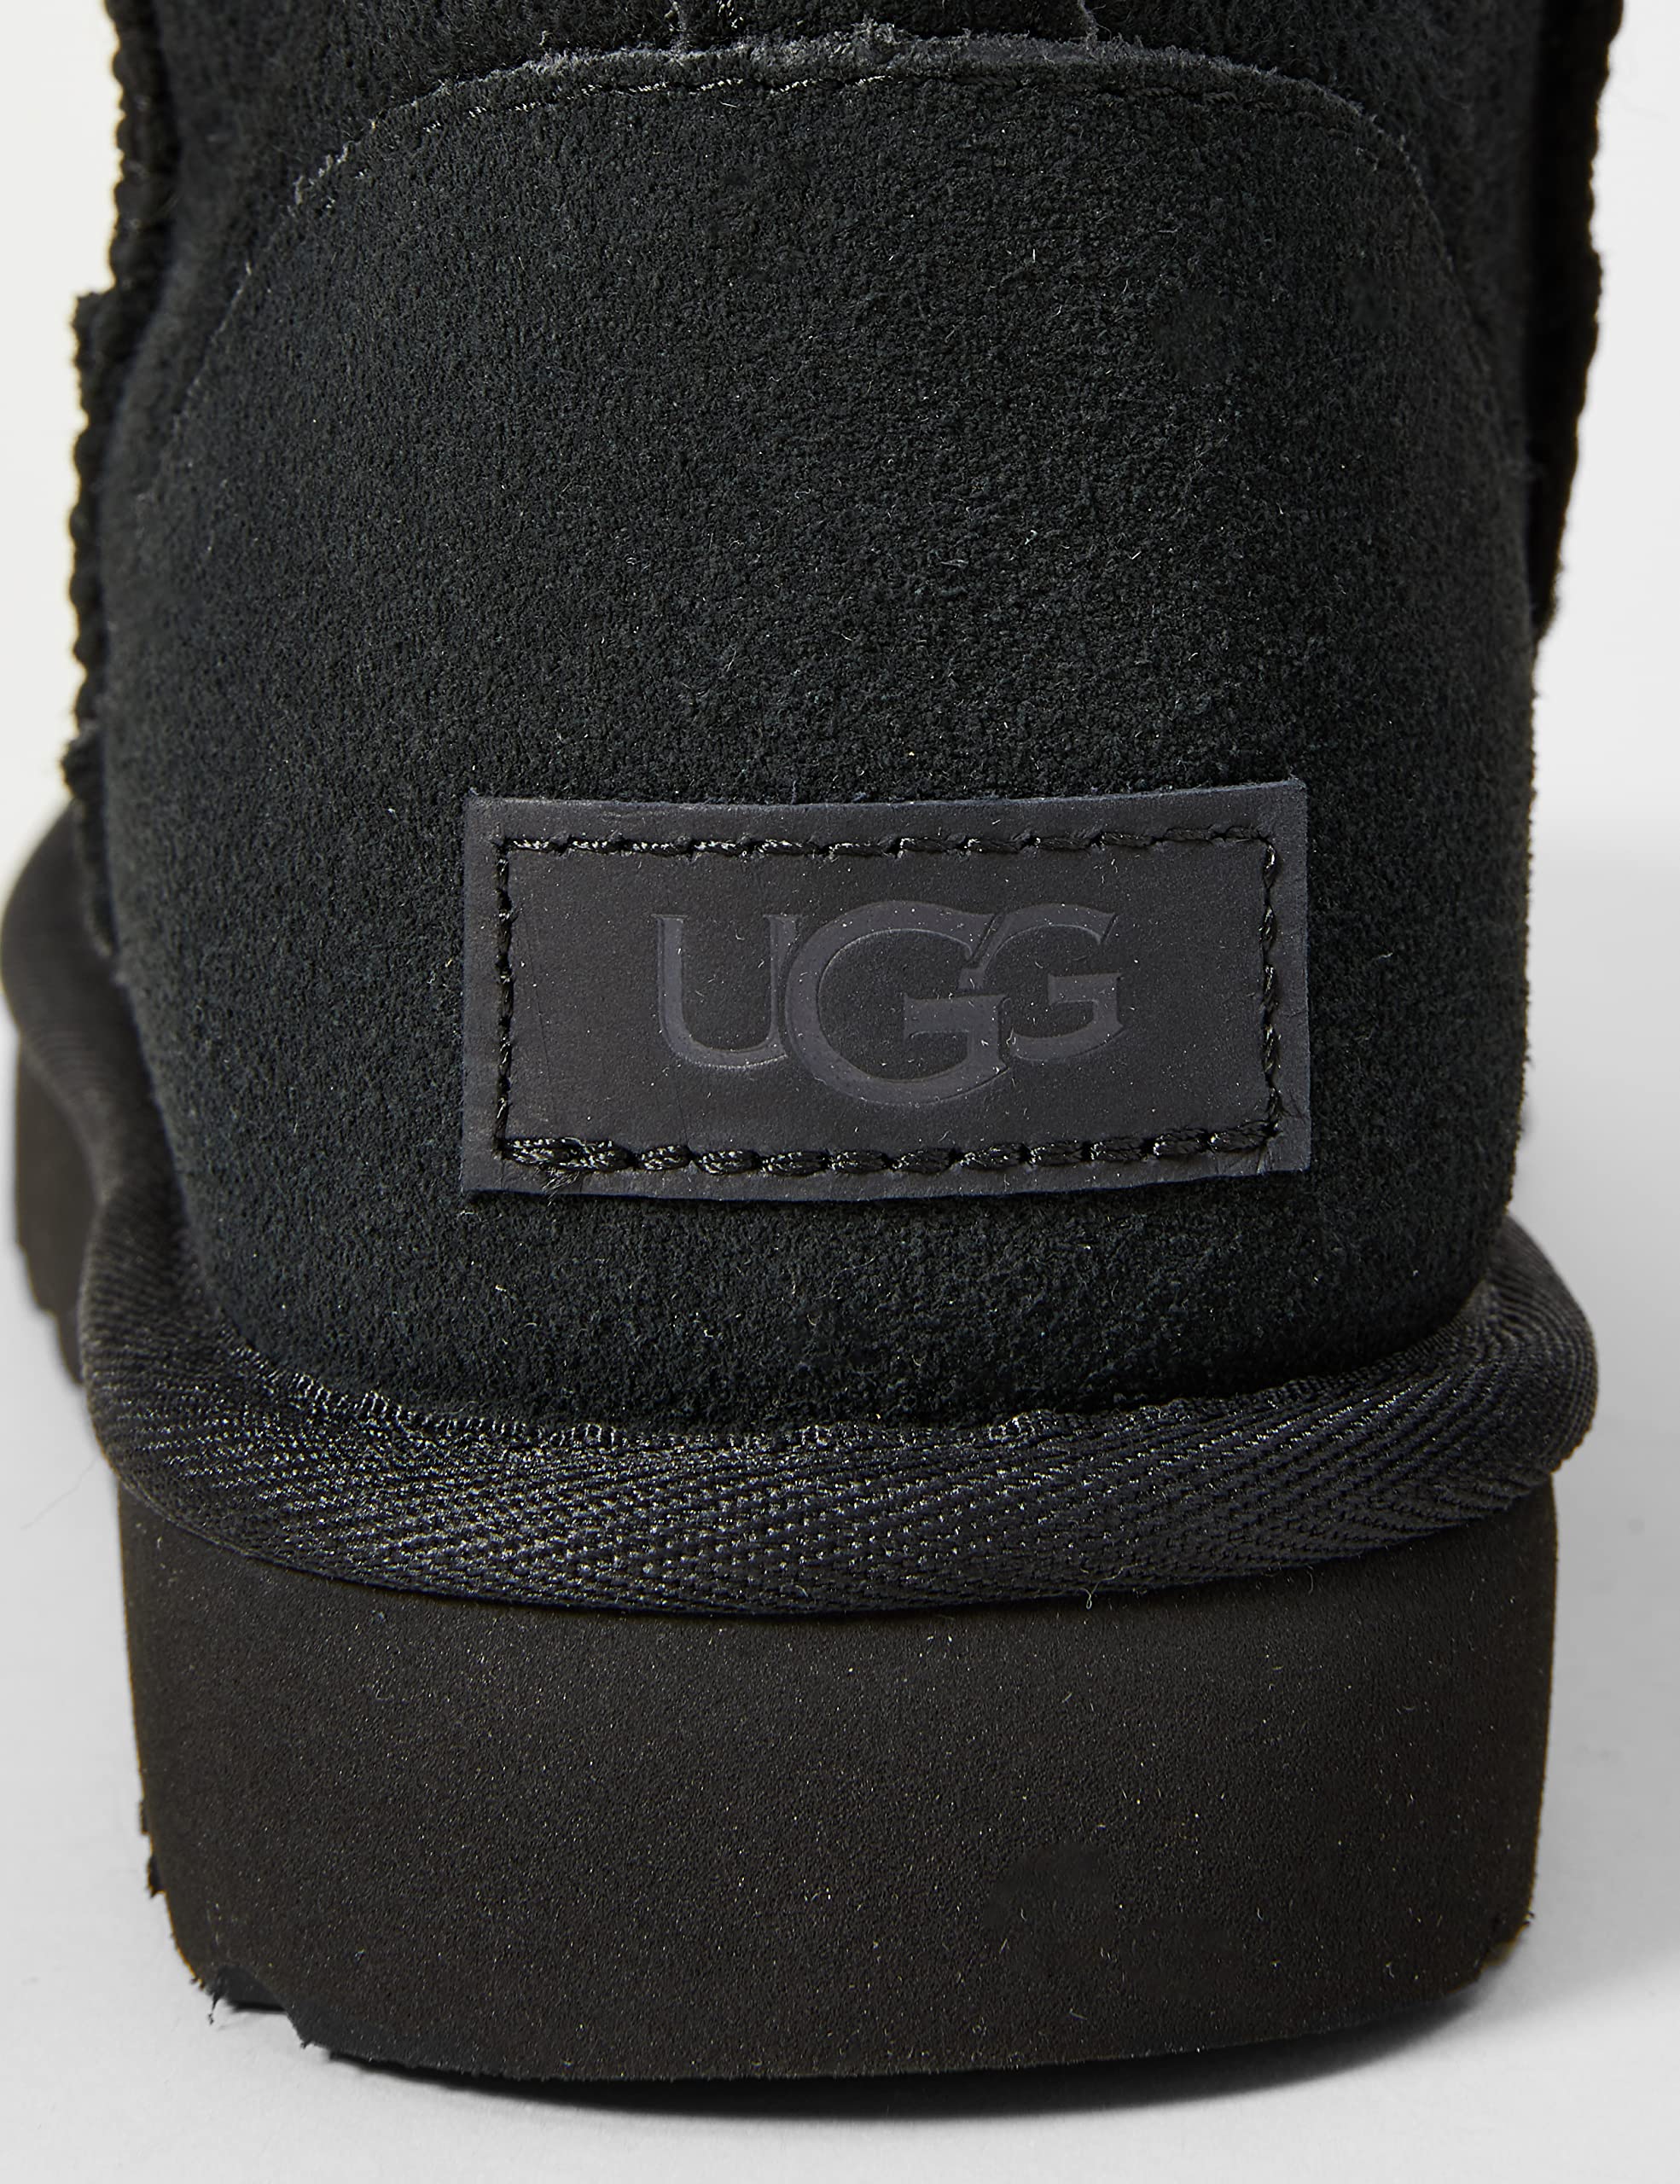 UGG Women's Classic Mini II Winter Boot